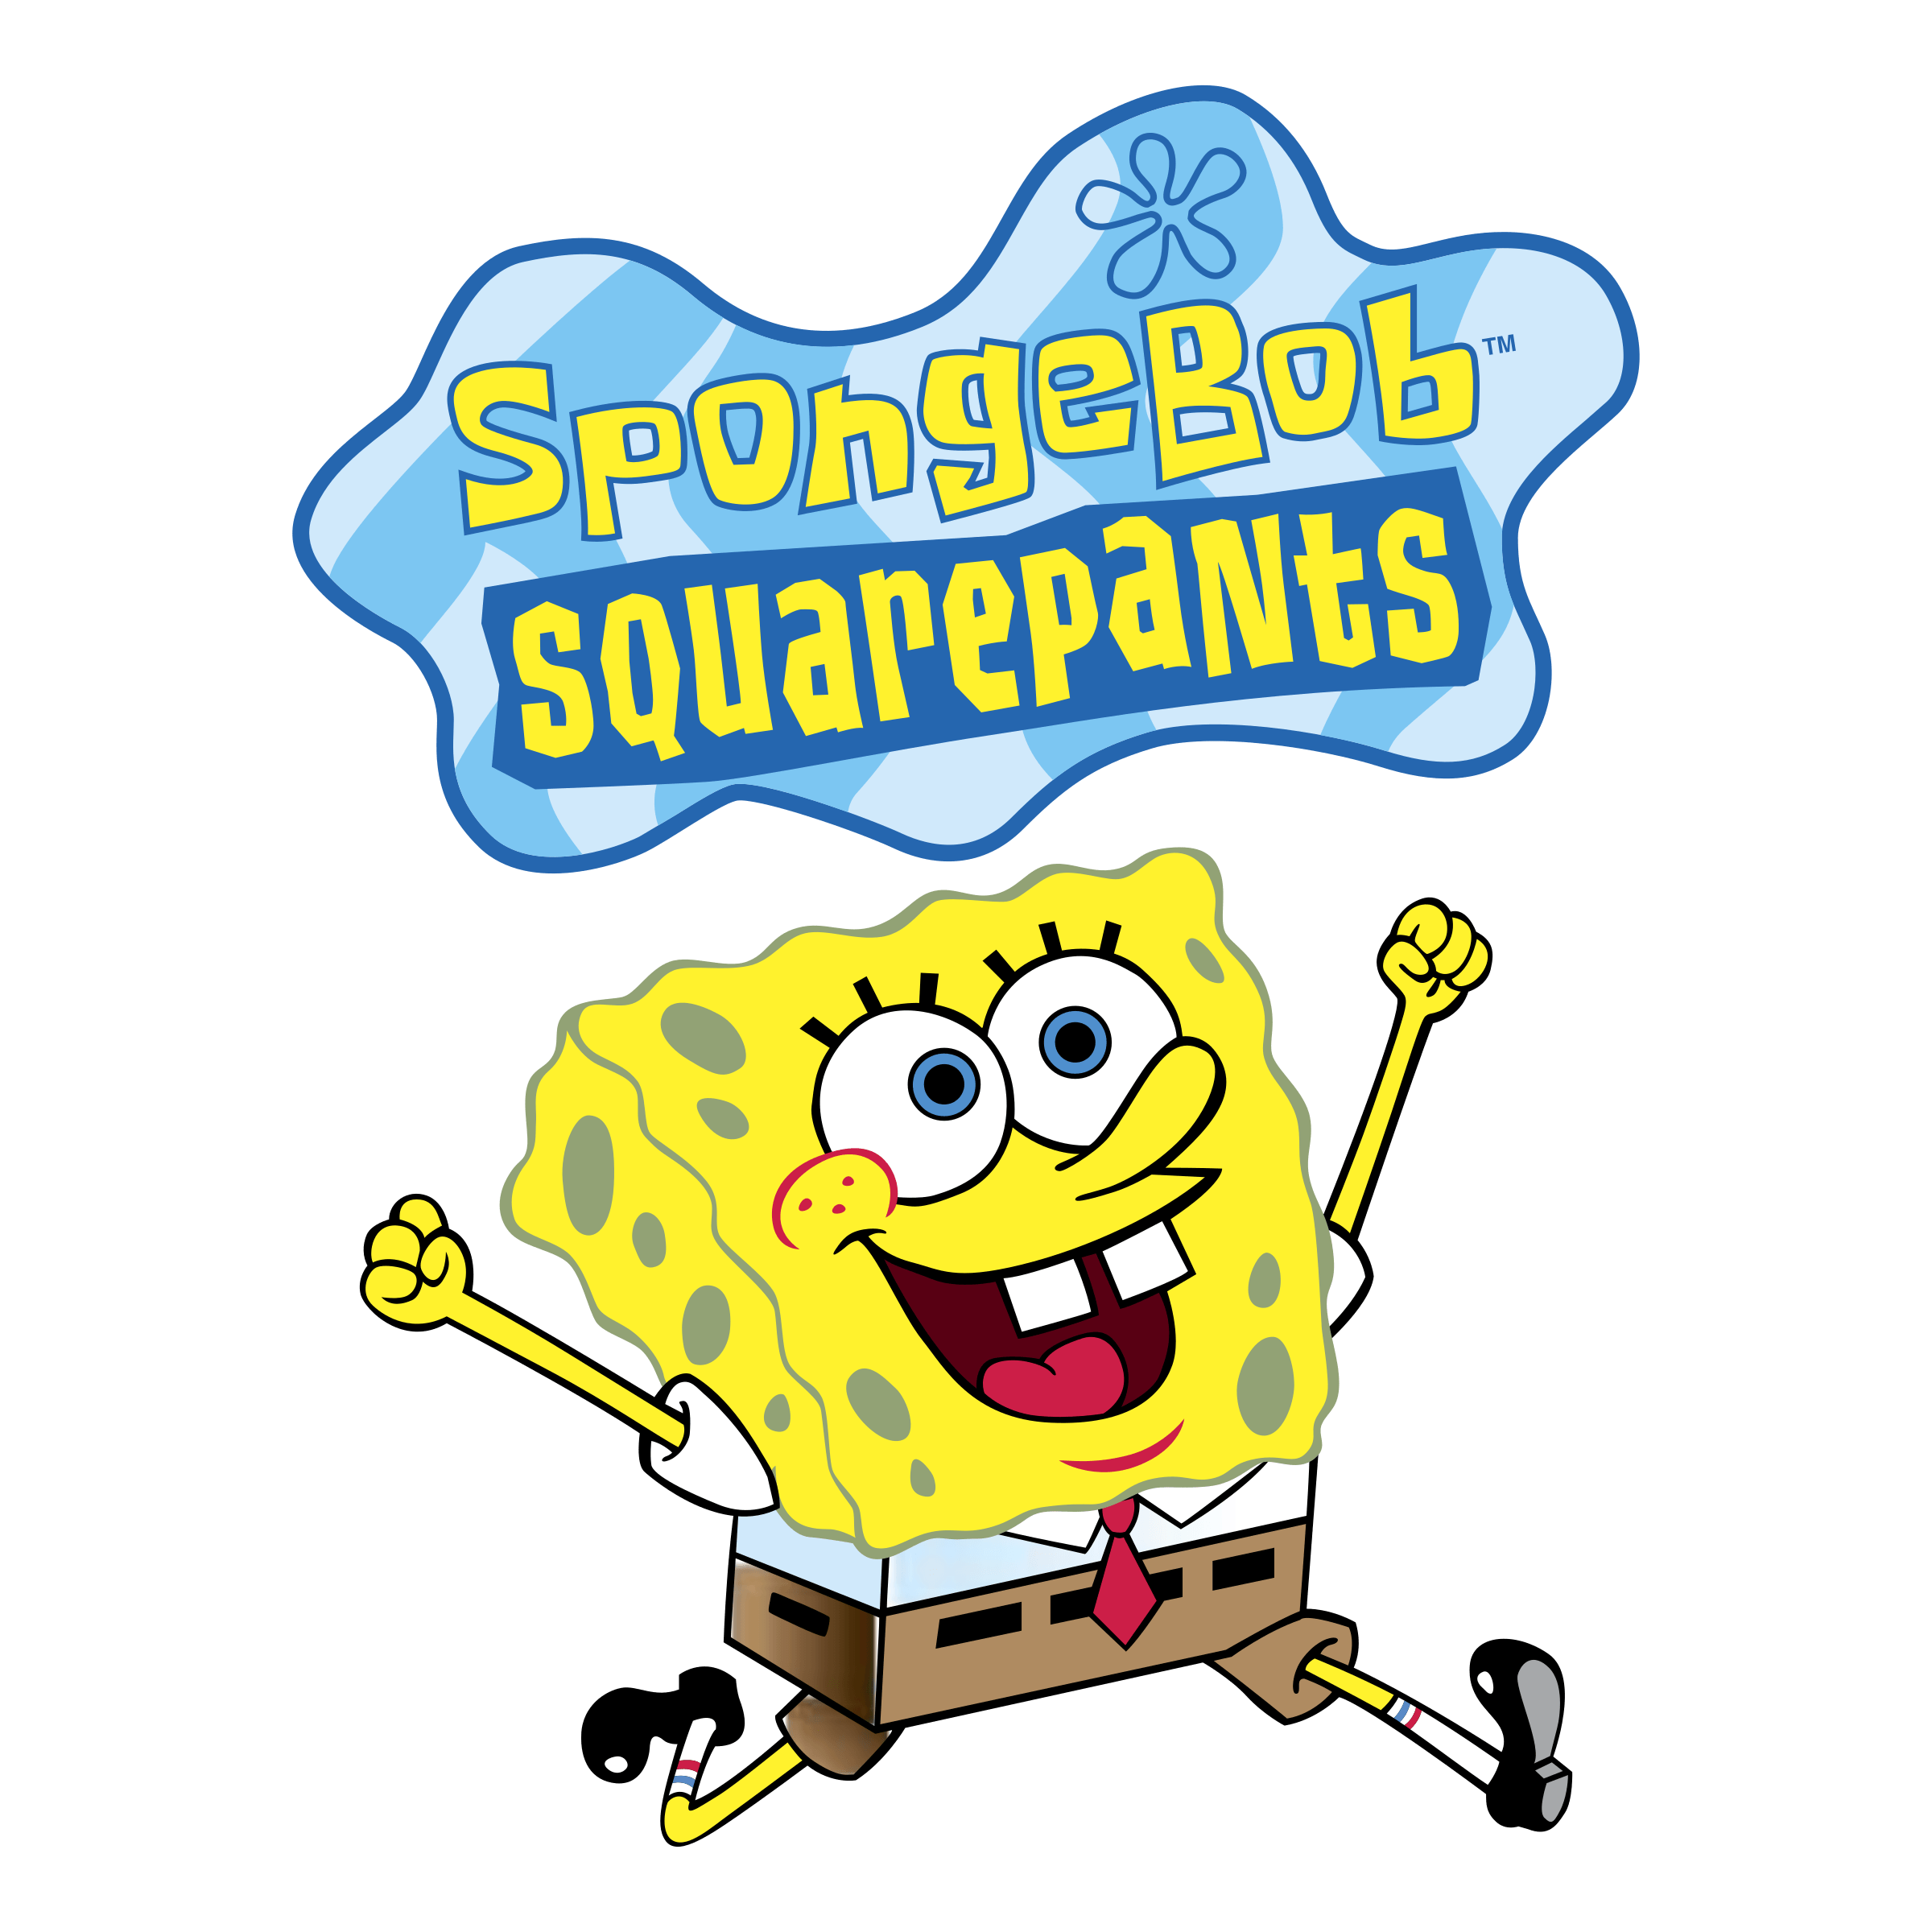 Spongebob SquarePants Logo - Spongebob Squarepants Logo PNG Transparent & SVG Vector - Freebie Supply